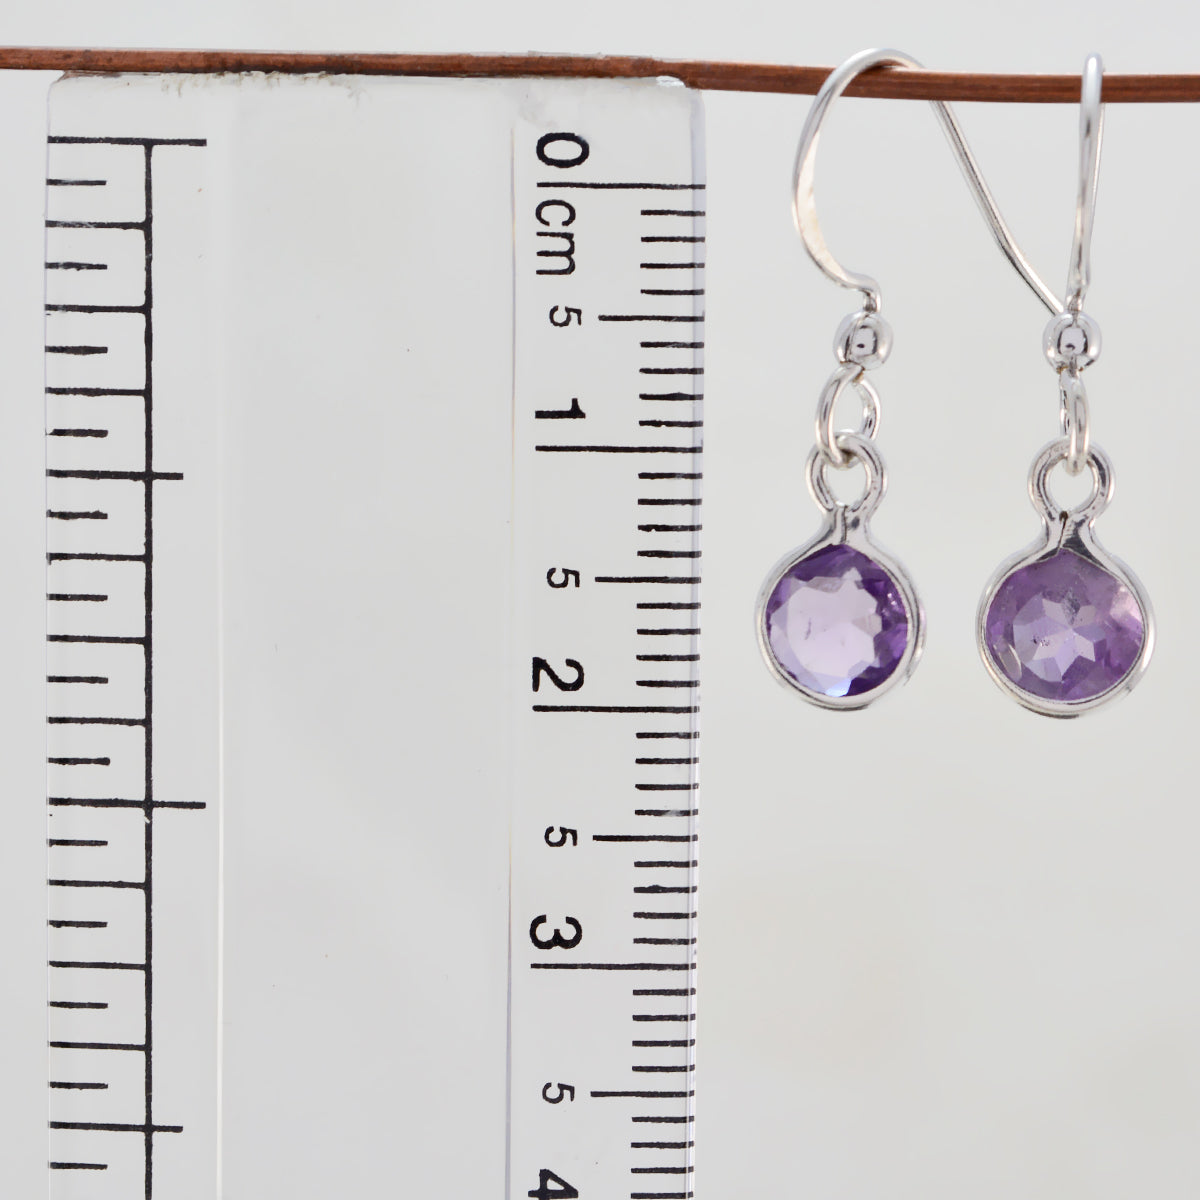 Riyo Nice Gemstone round Faceted Purple Amethyst Silver Earring cyber Monday gift